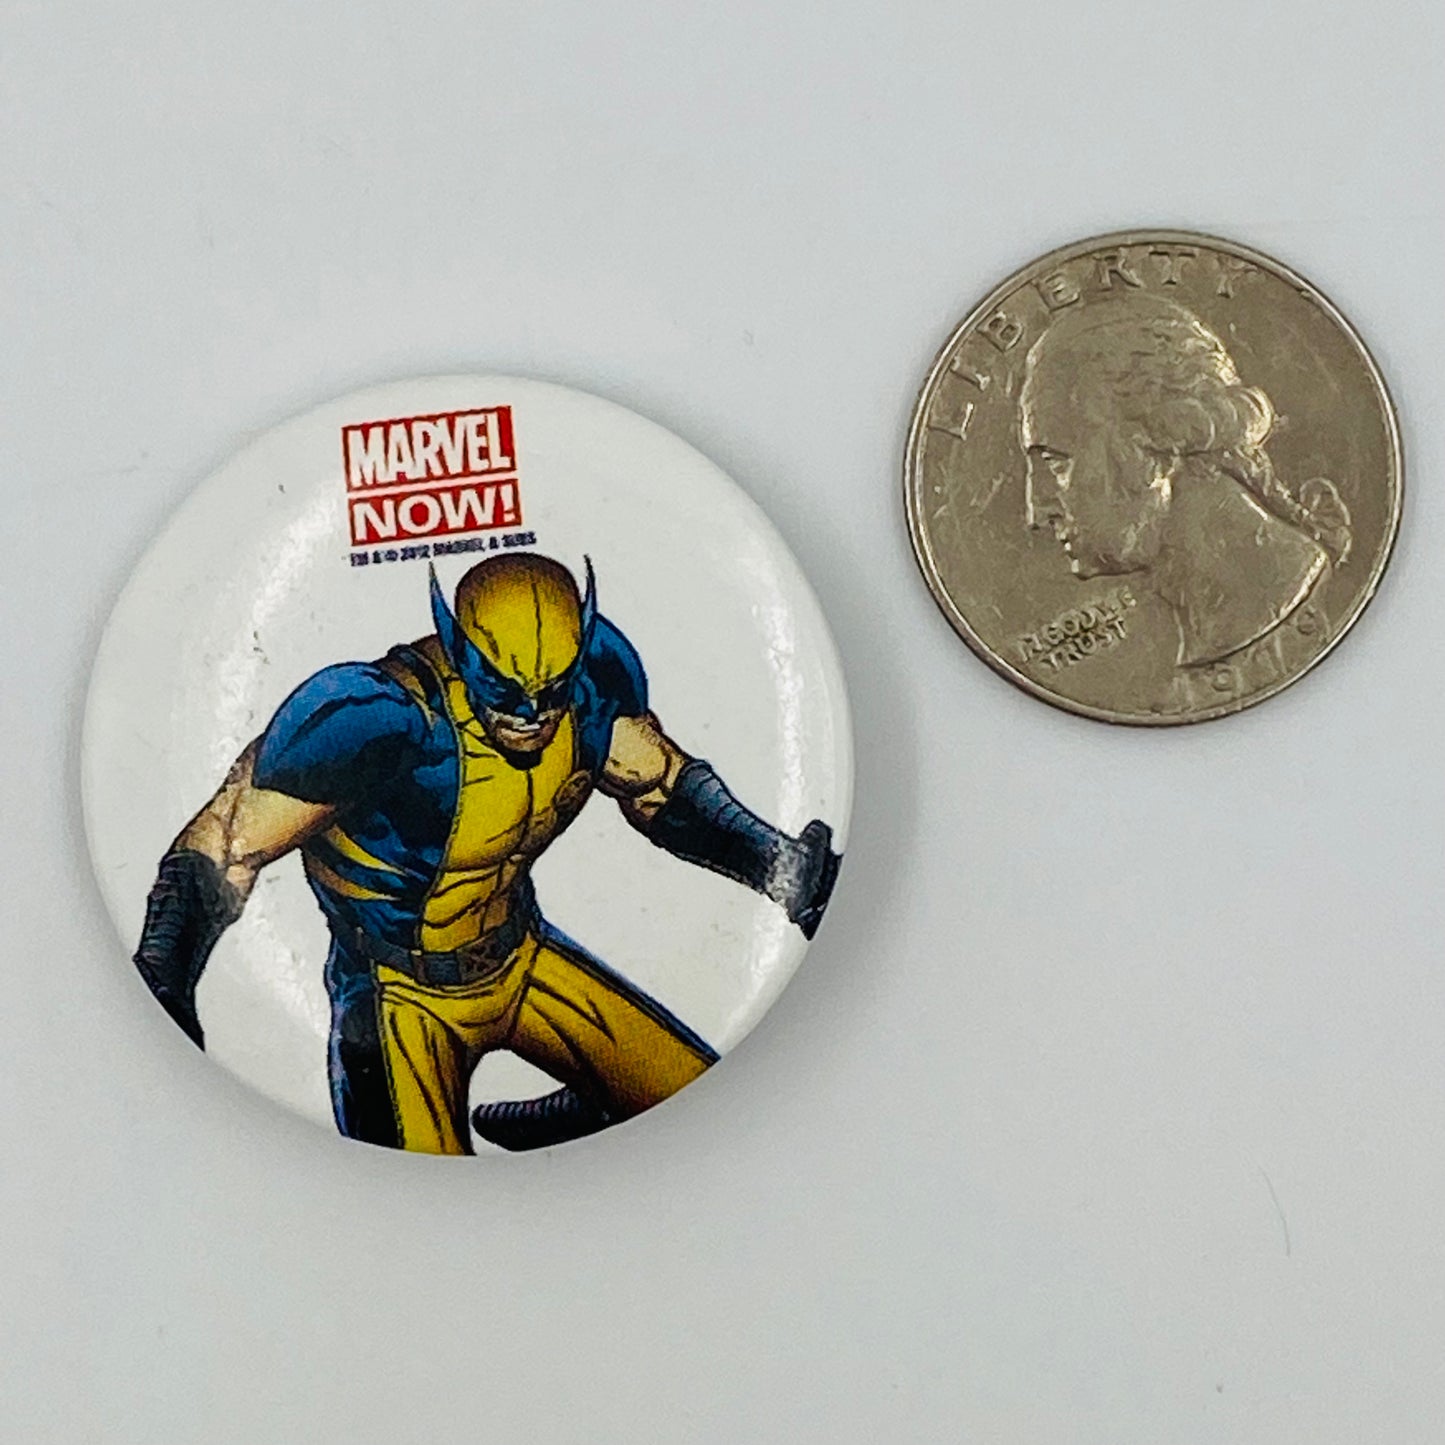 Wolverine Marvel Now! by Joe Quesada promo pinback button (2012)